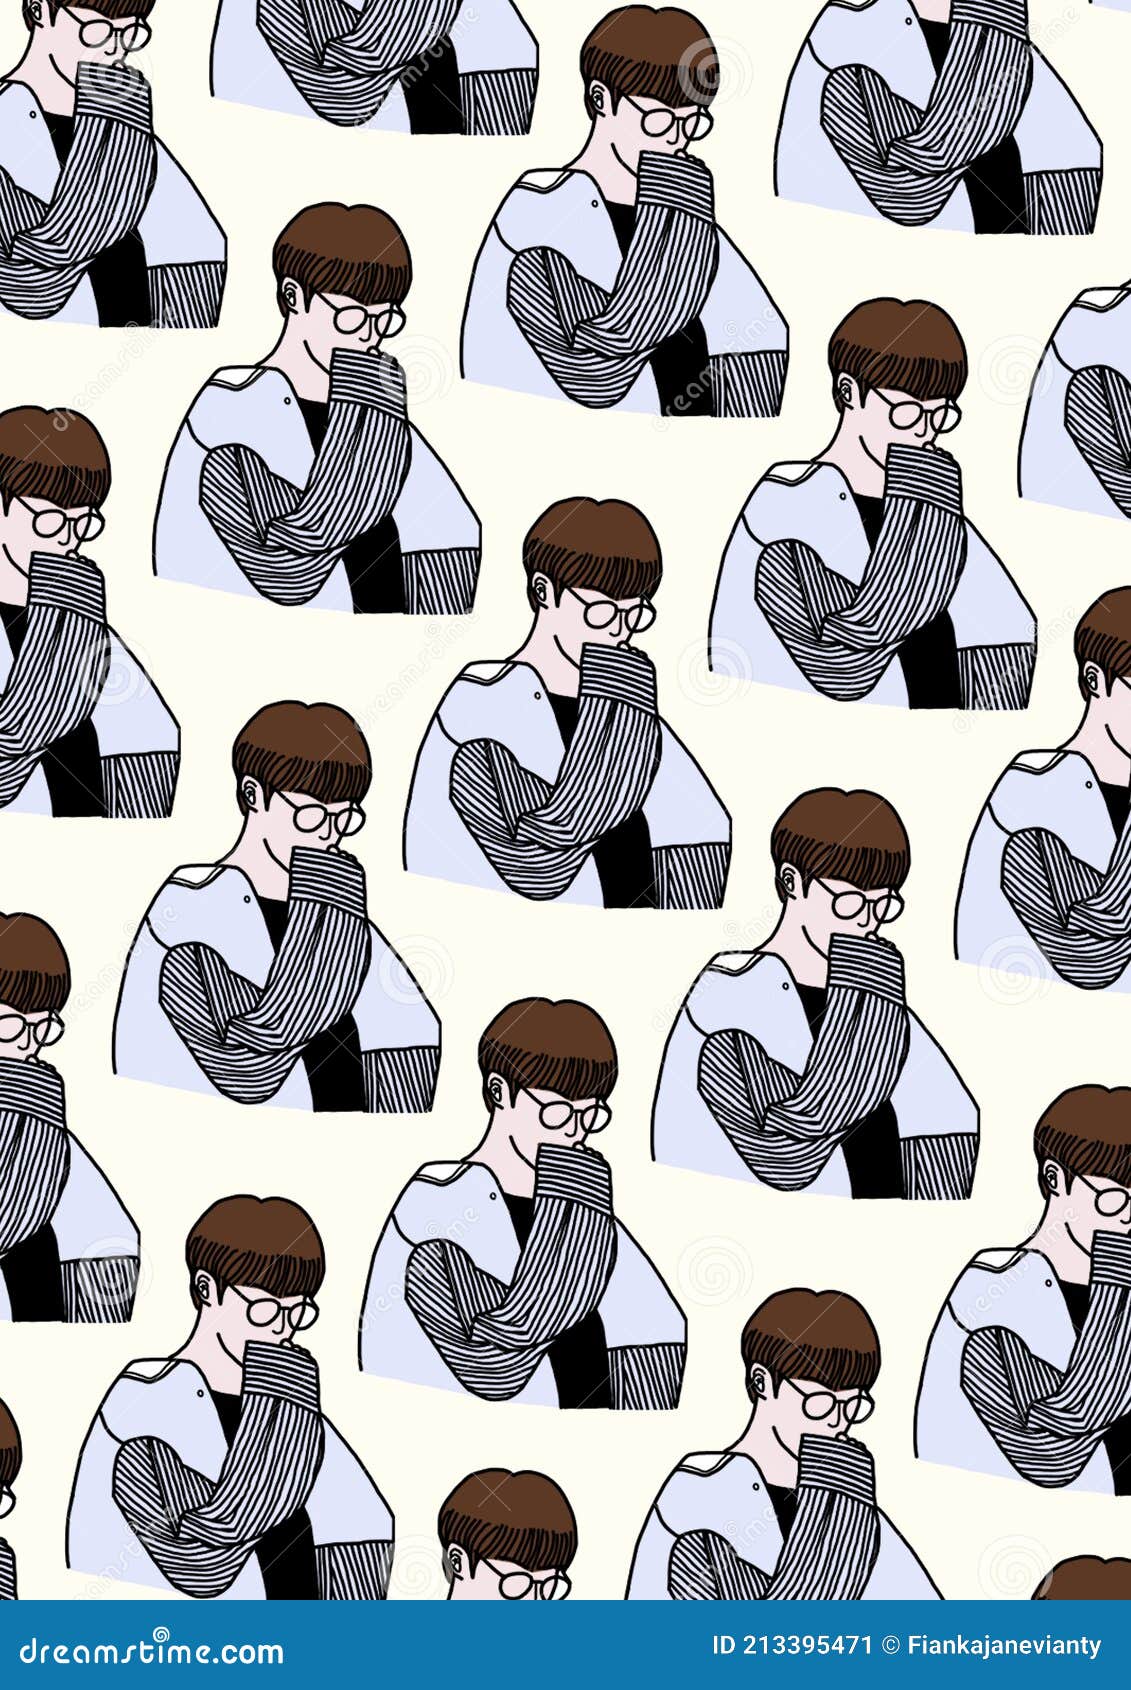 Bts Dibujos Animados Pantalla De Bloqueo Kim Seokjin Stock de ilustración -  Ilustración de wallpaper, pantalla: 213395471